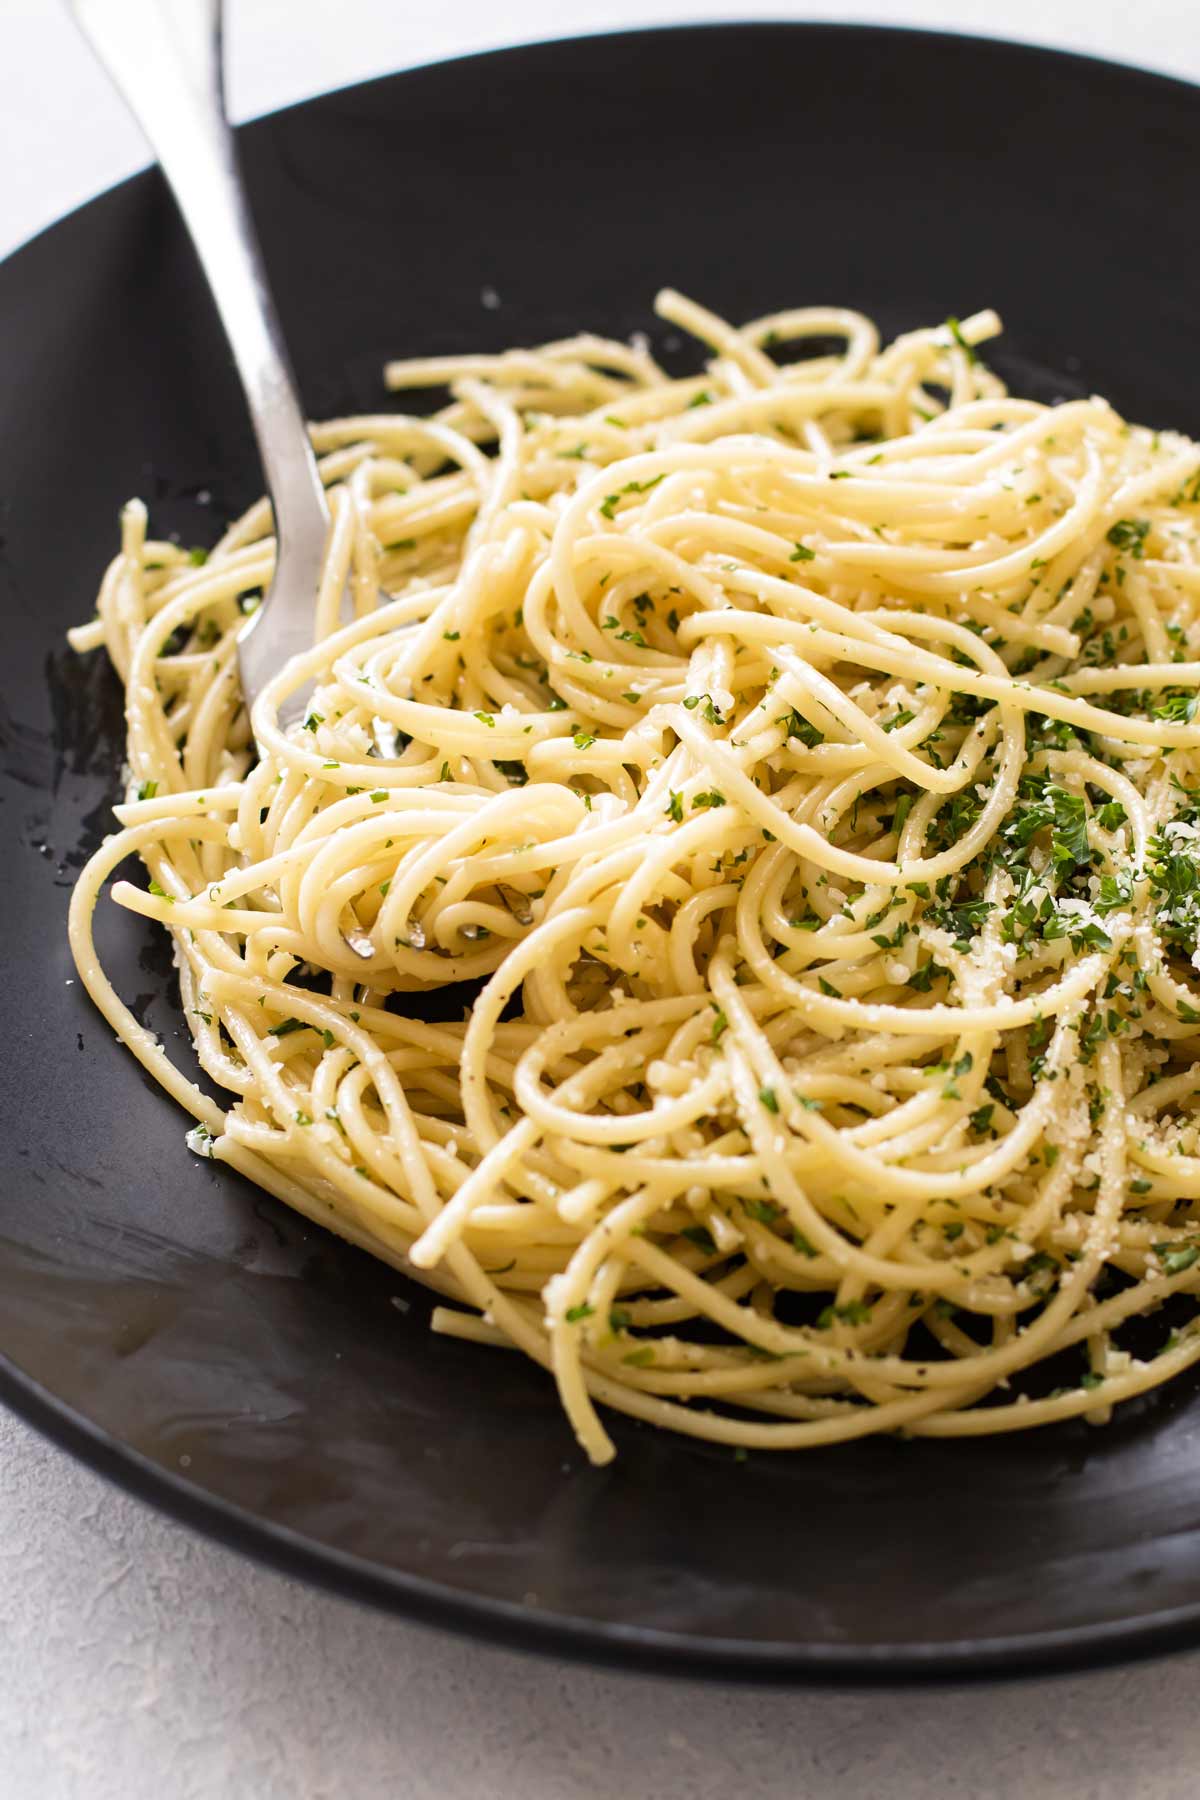 Dinner for One: Easy Pasta with Olive Oil & Garlic | Girl Gone Gourmet